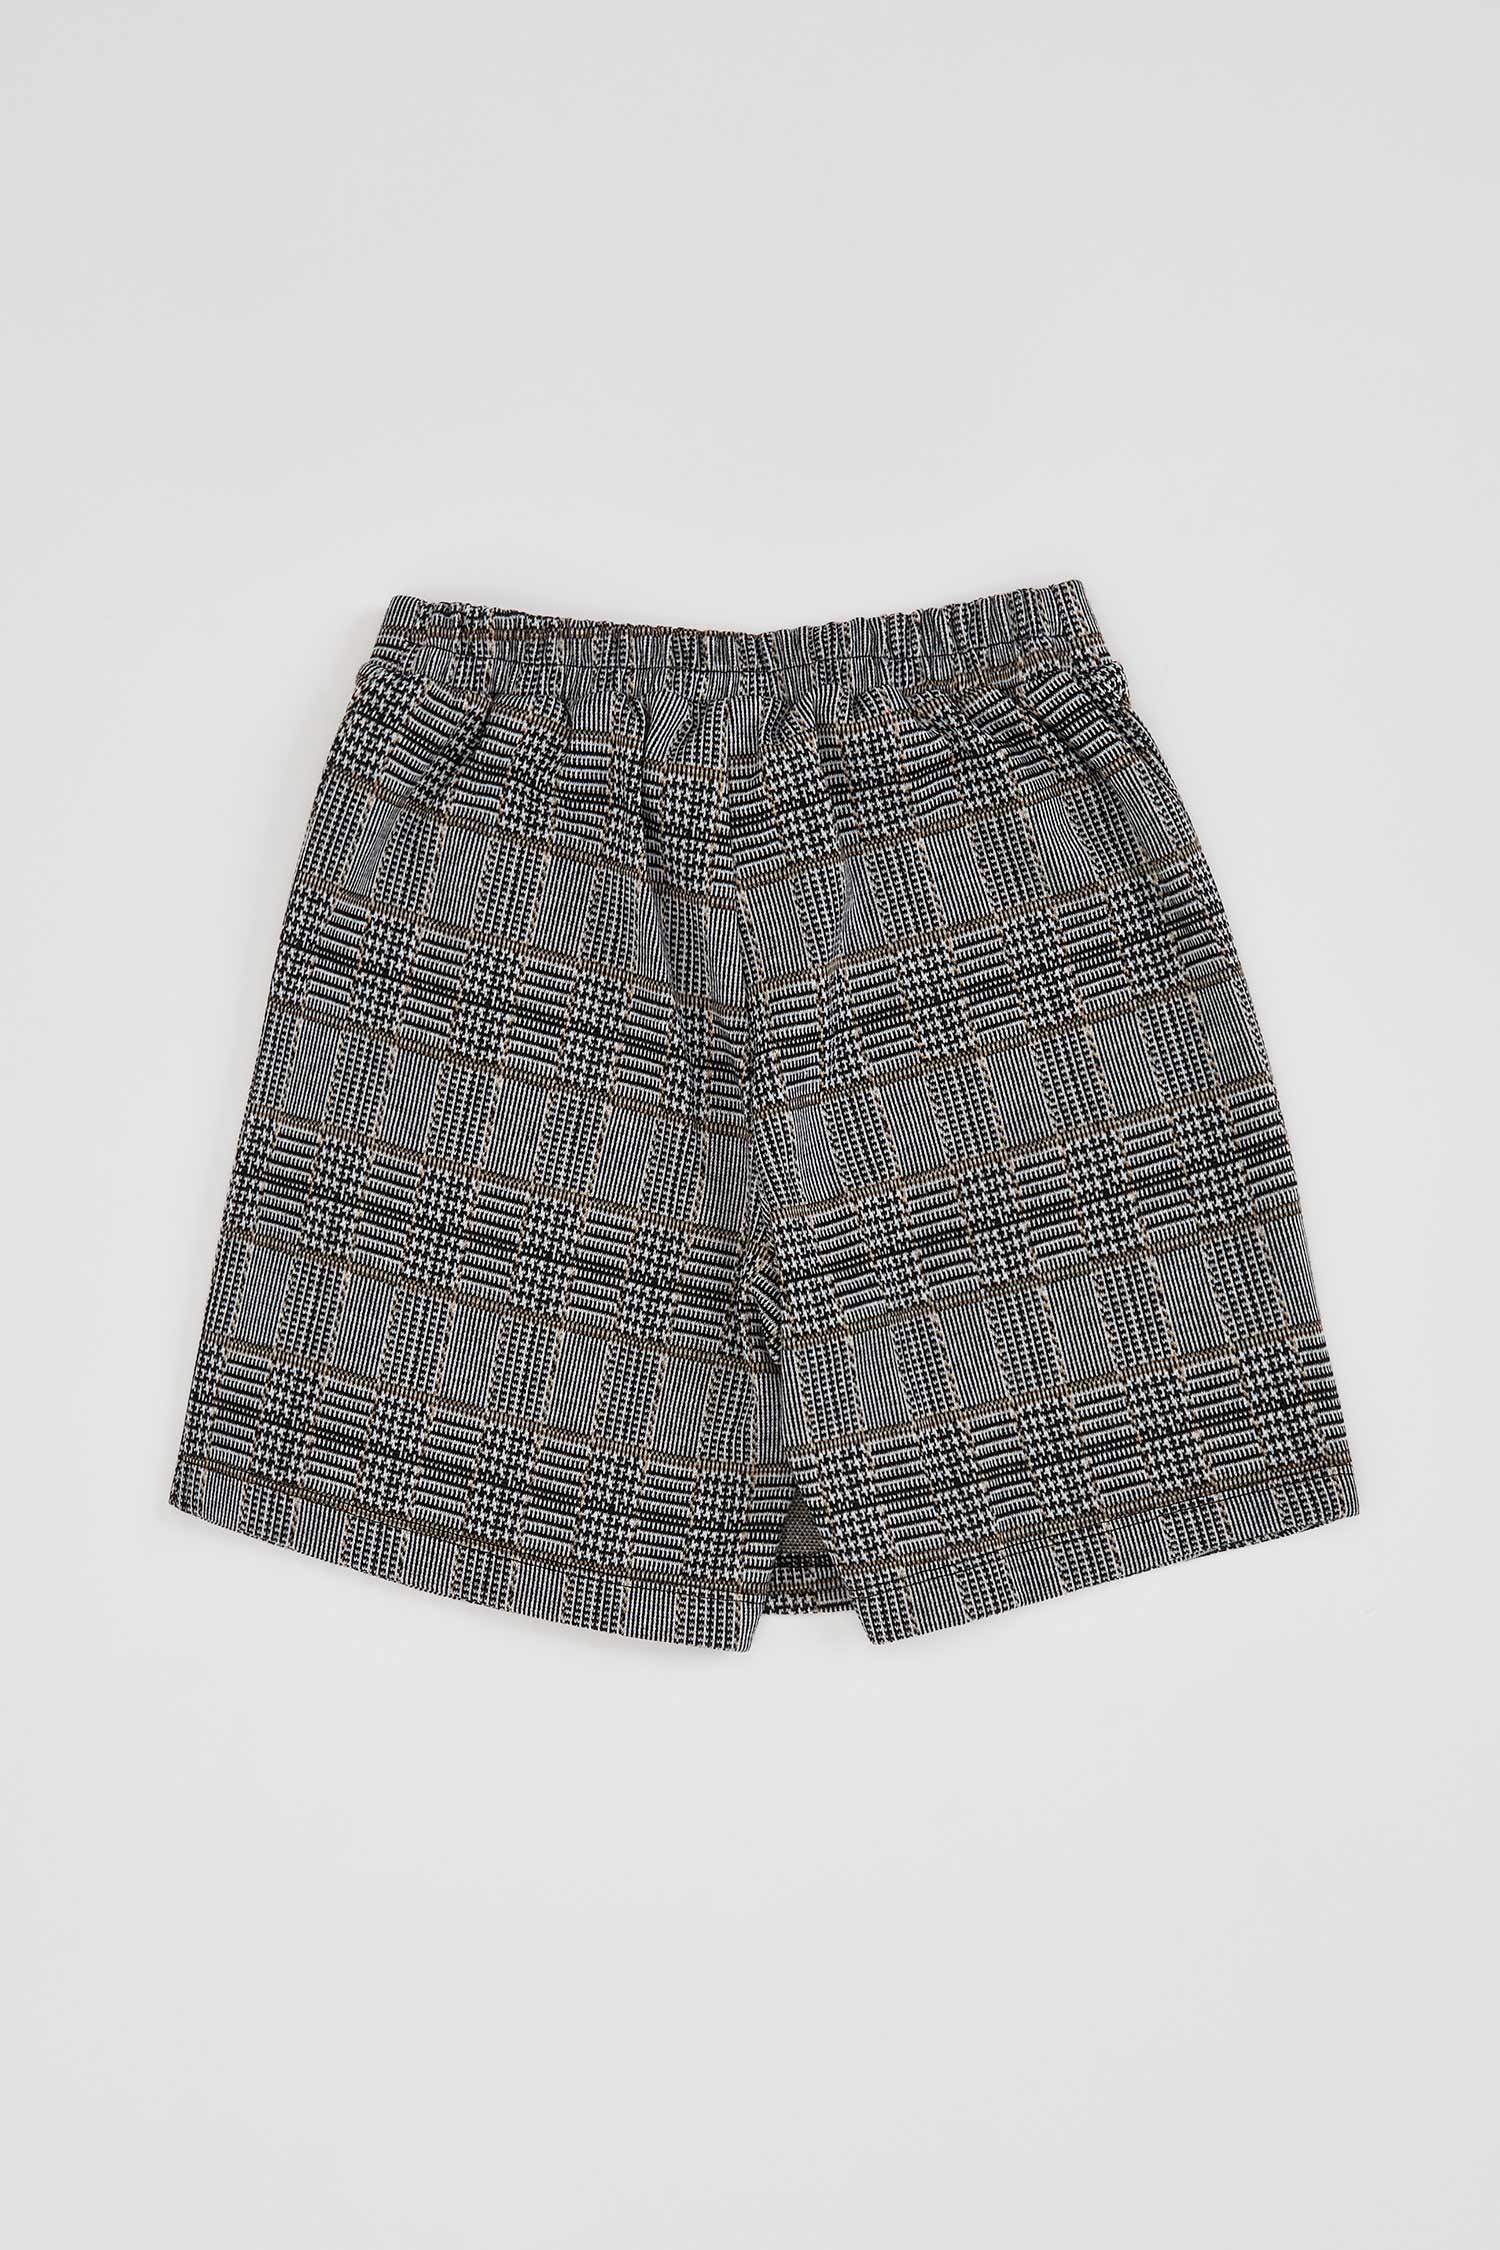 Grey GIRLS & TEENS Girl Check Patterned Short Skirt 1509453 | DeFacto